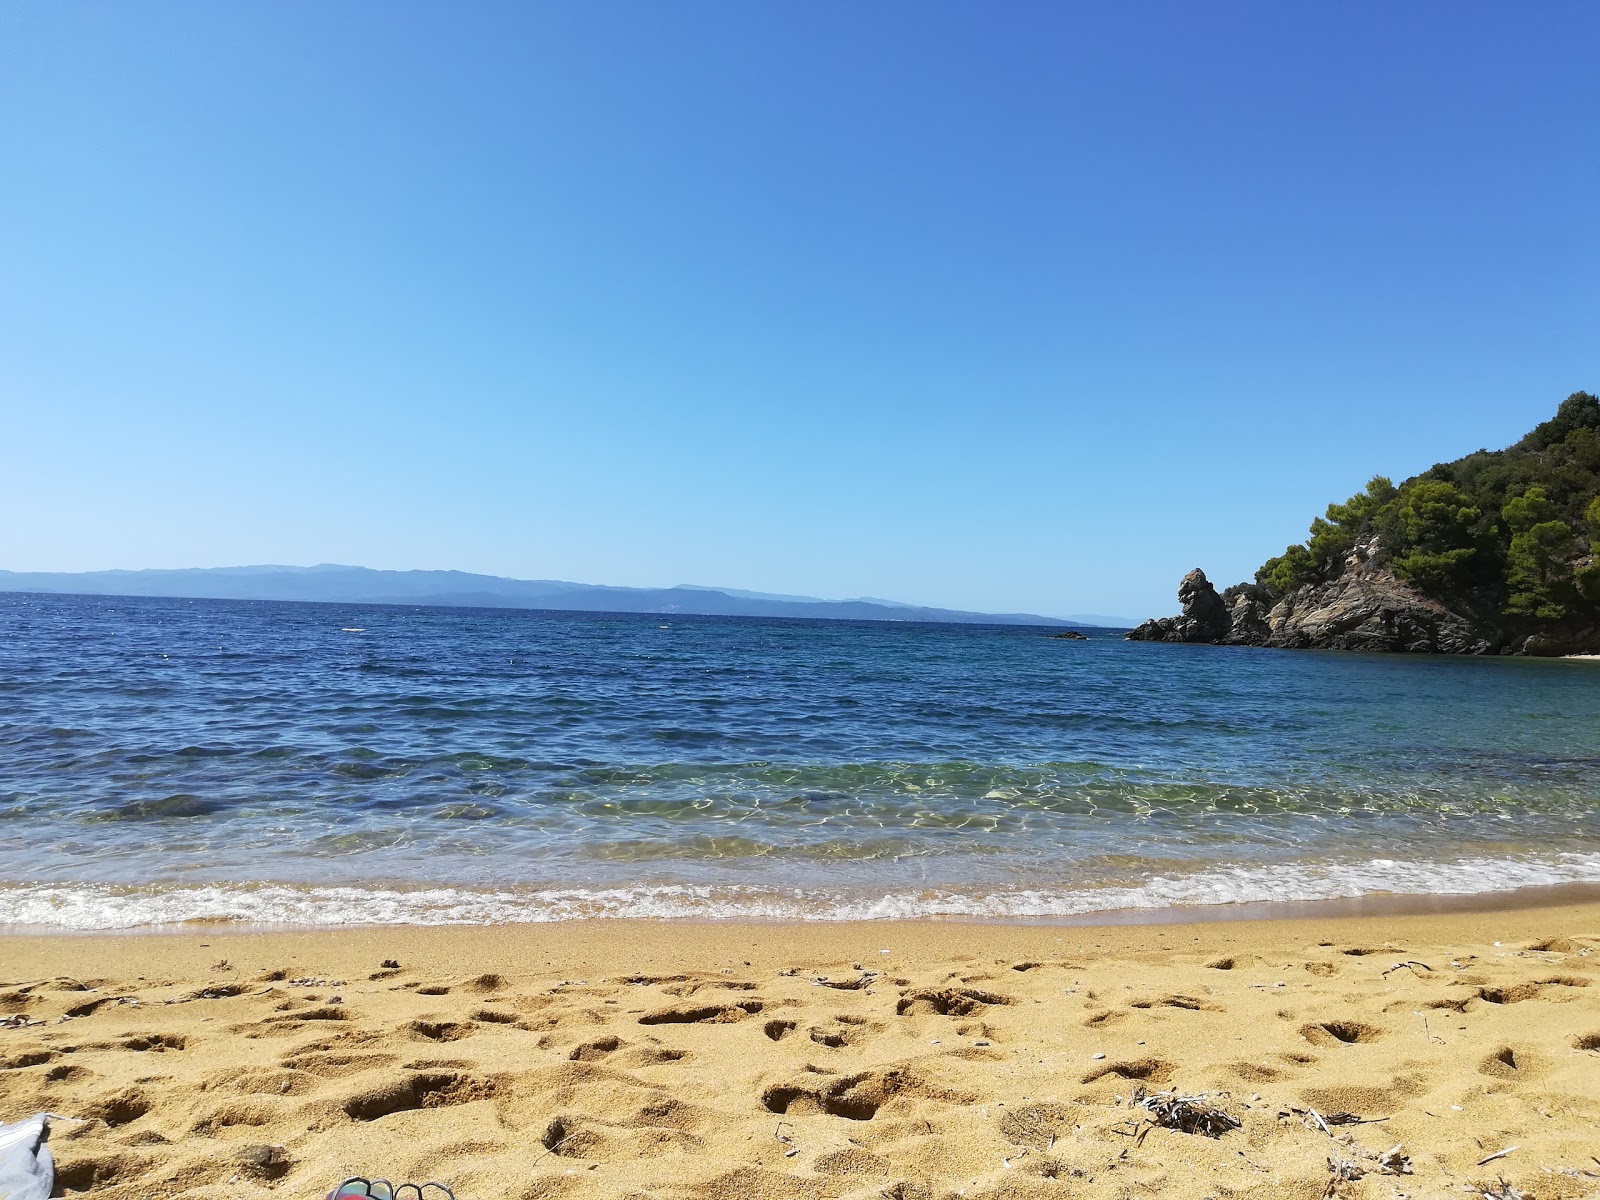 Foto di Diamandis beach ubicato in zona naturale